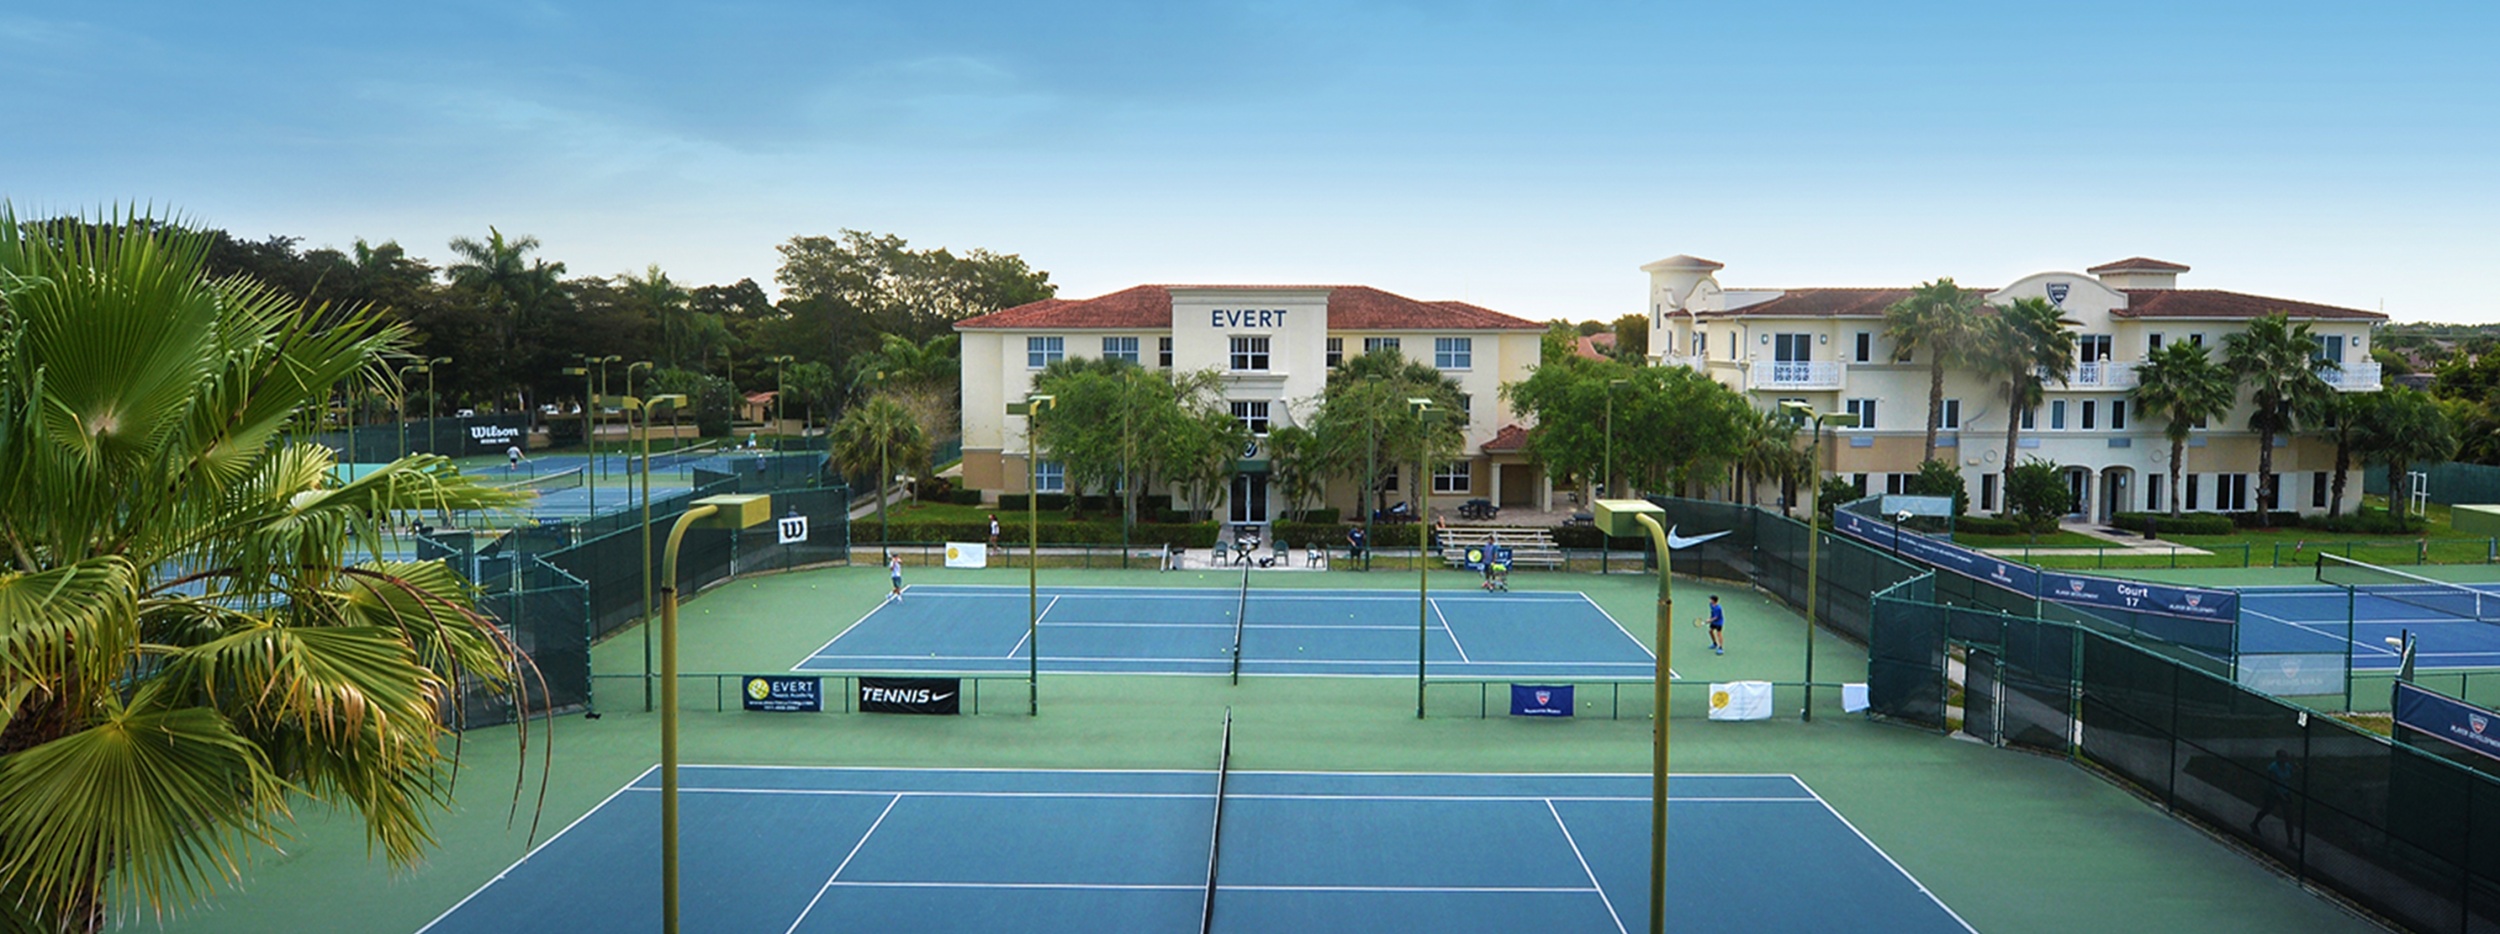 Evert Tennis Training Academy